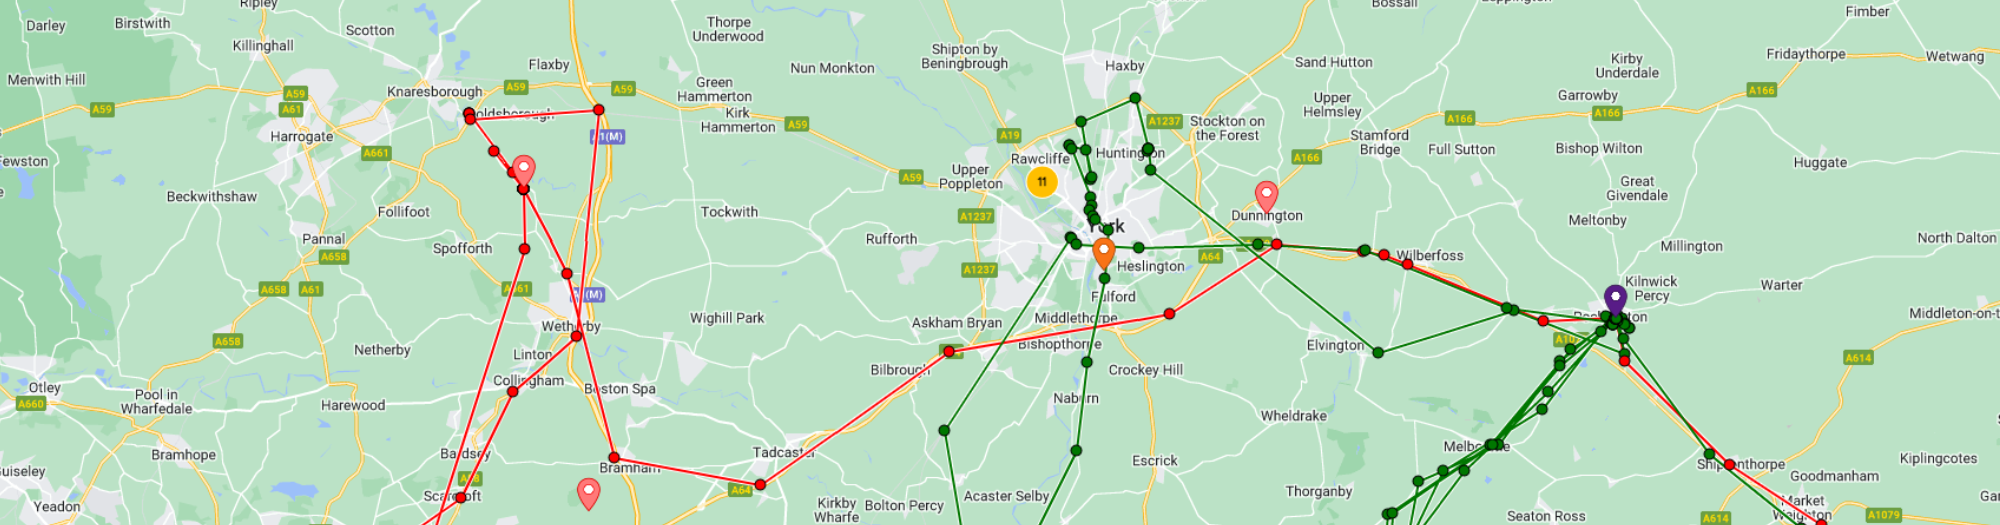 Yorkshire tracking on portal